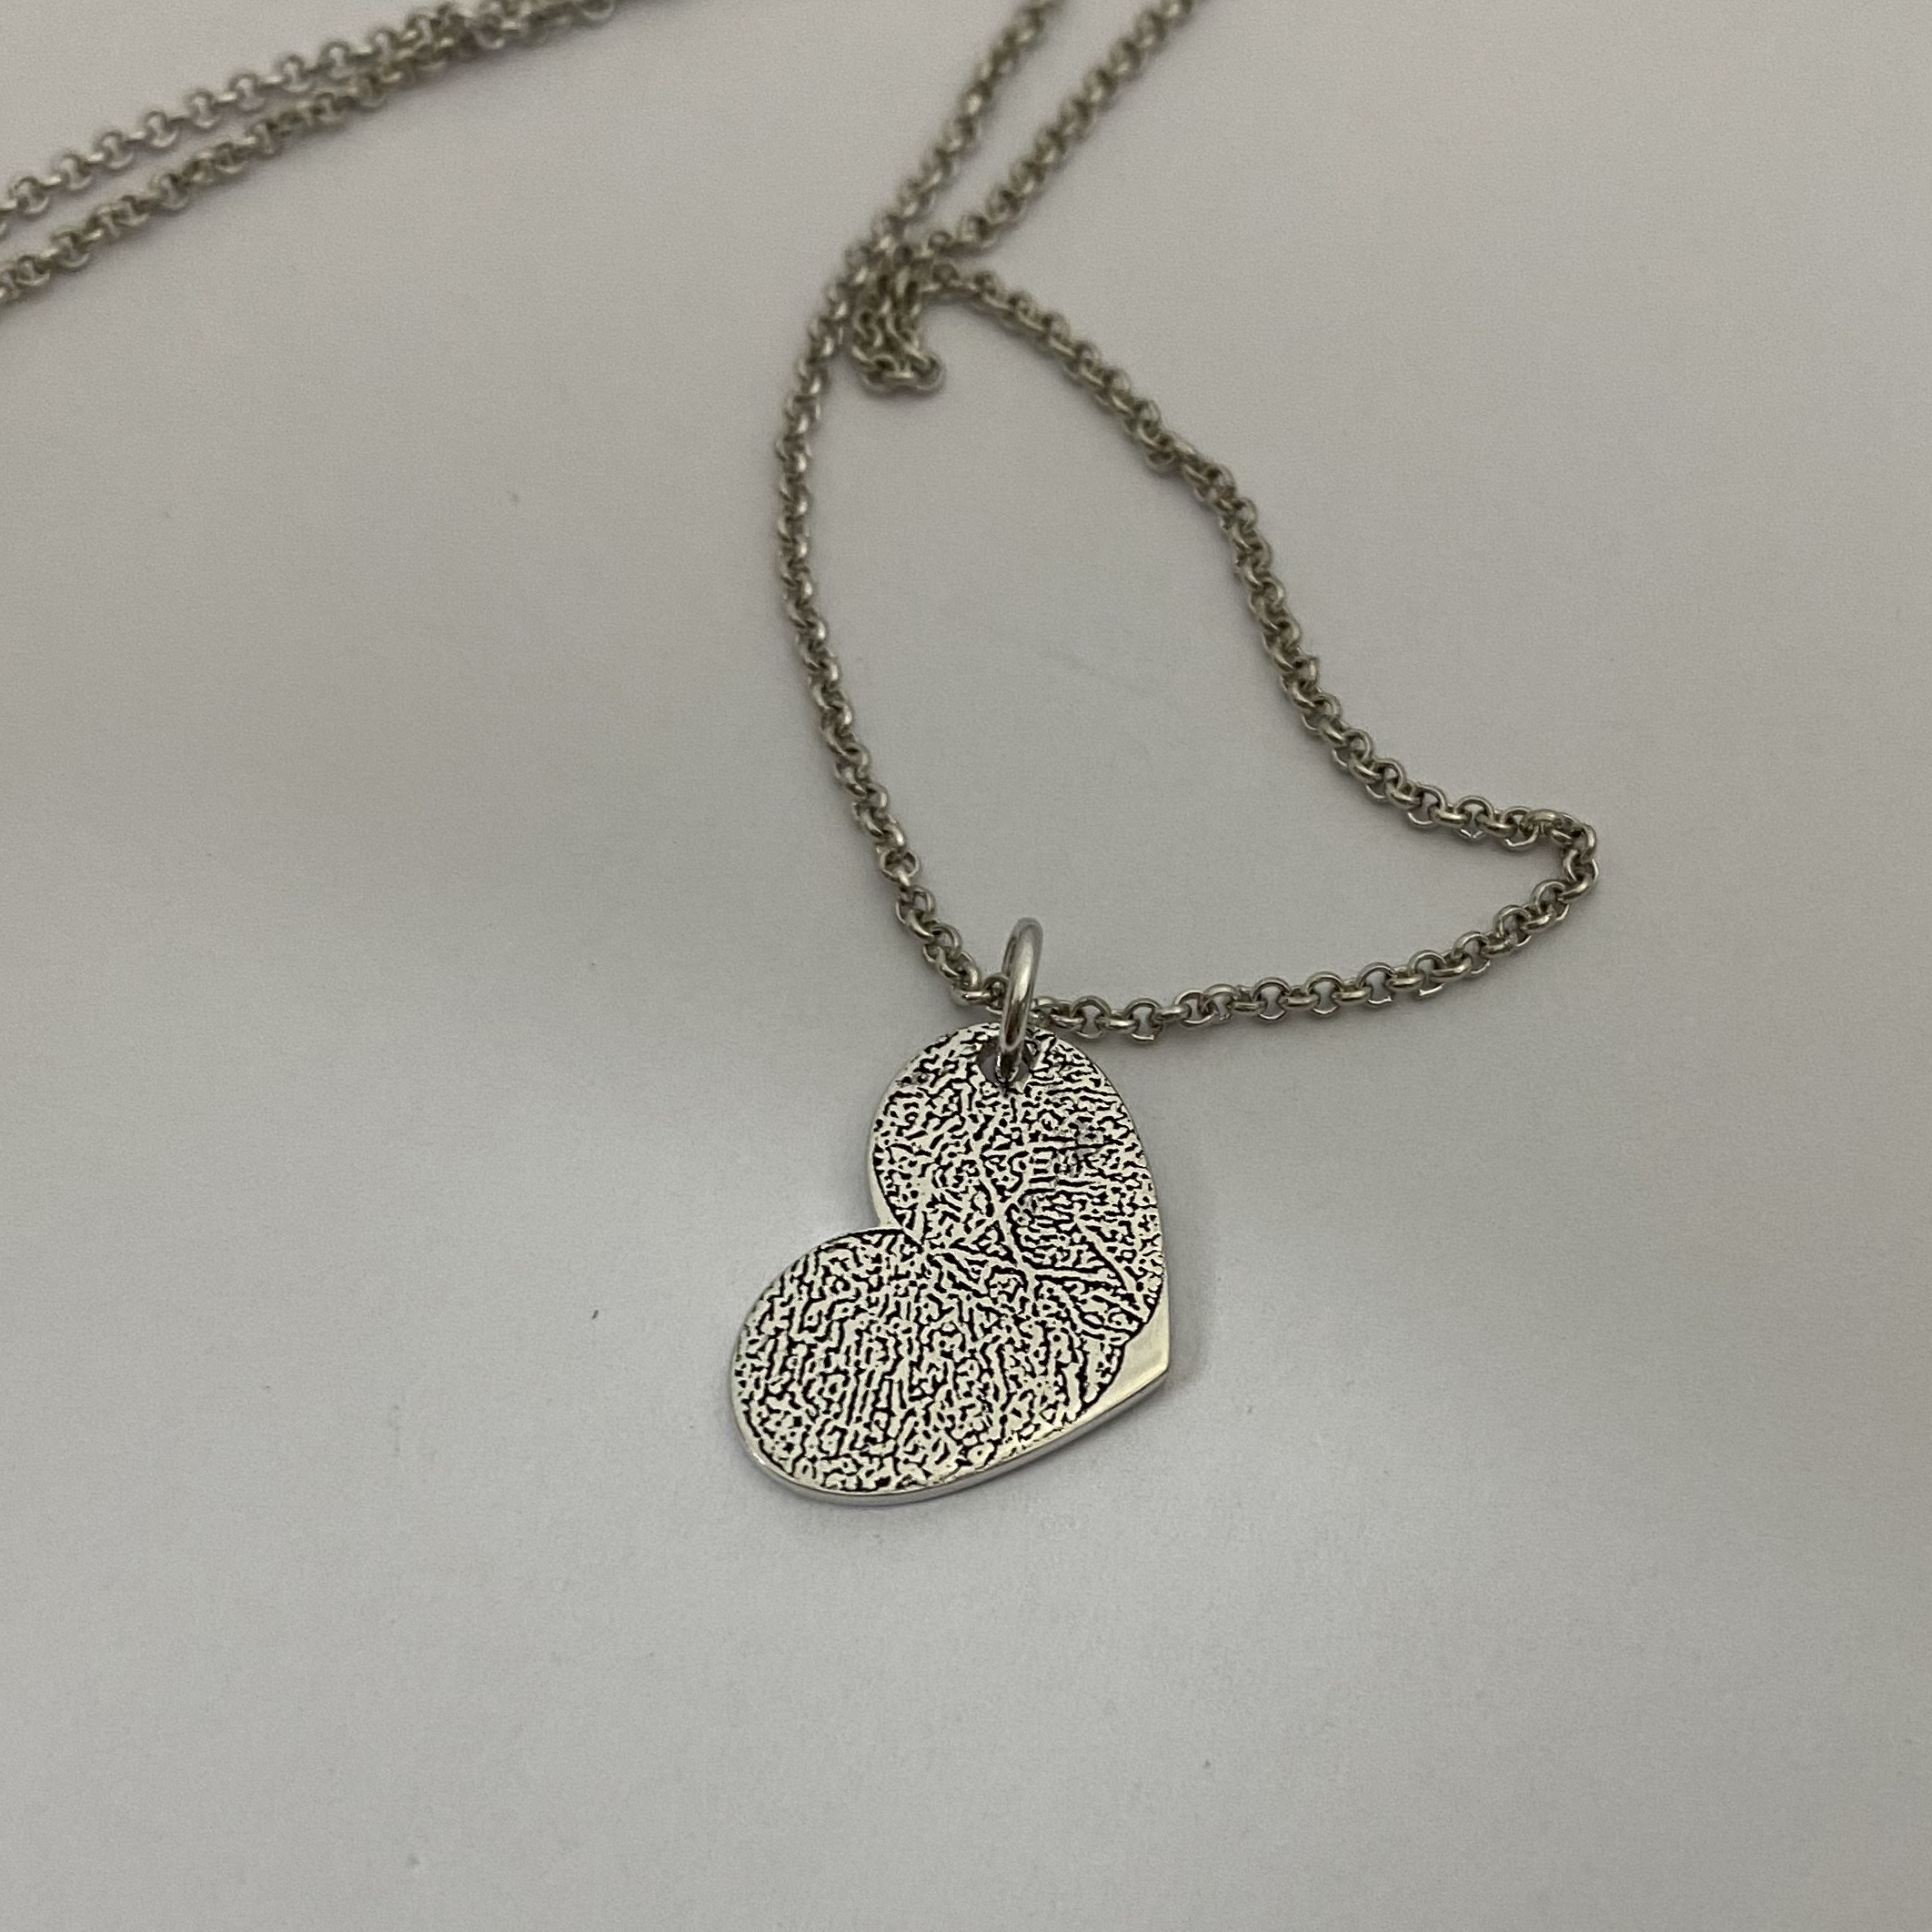 Personalized 2 Fingerprint Heart Necklace